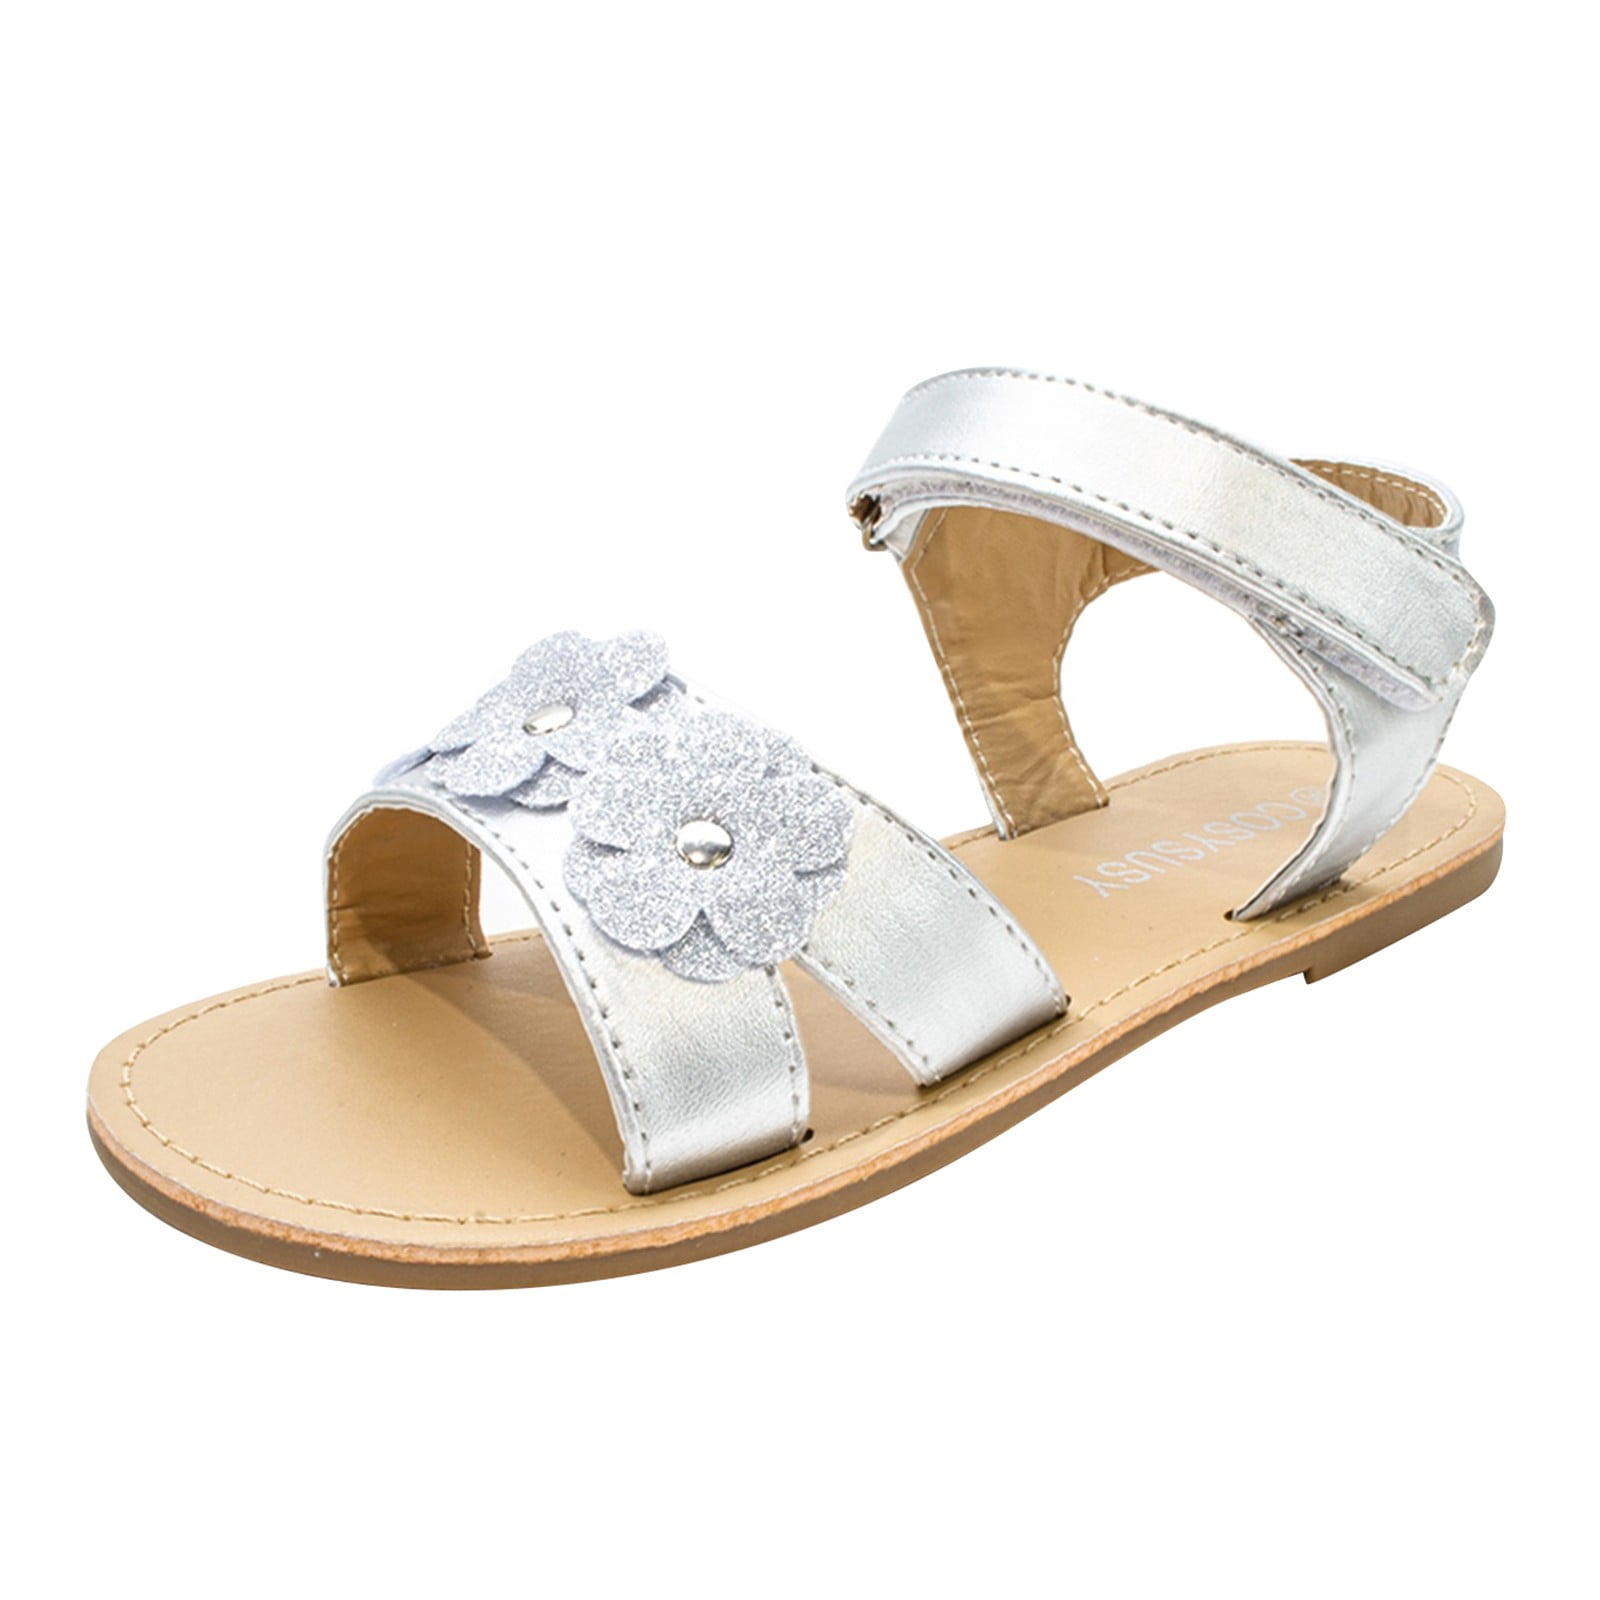 White Dress Sandals For Girls Hot Sale | bellvalefarms.com